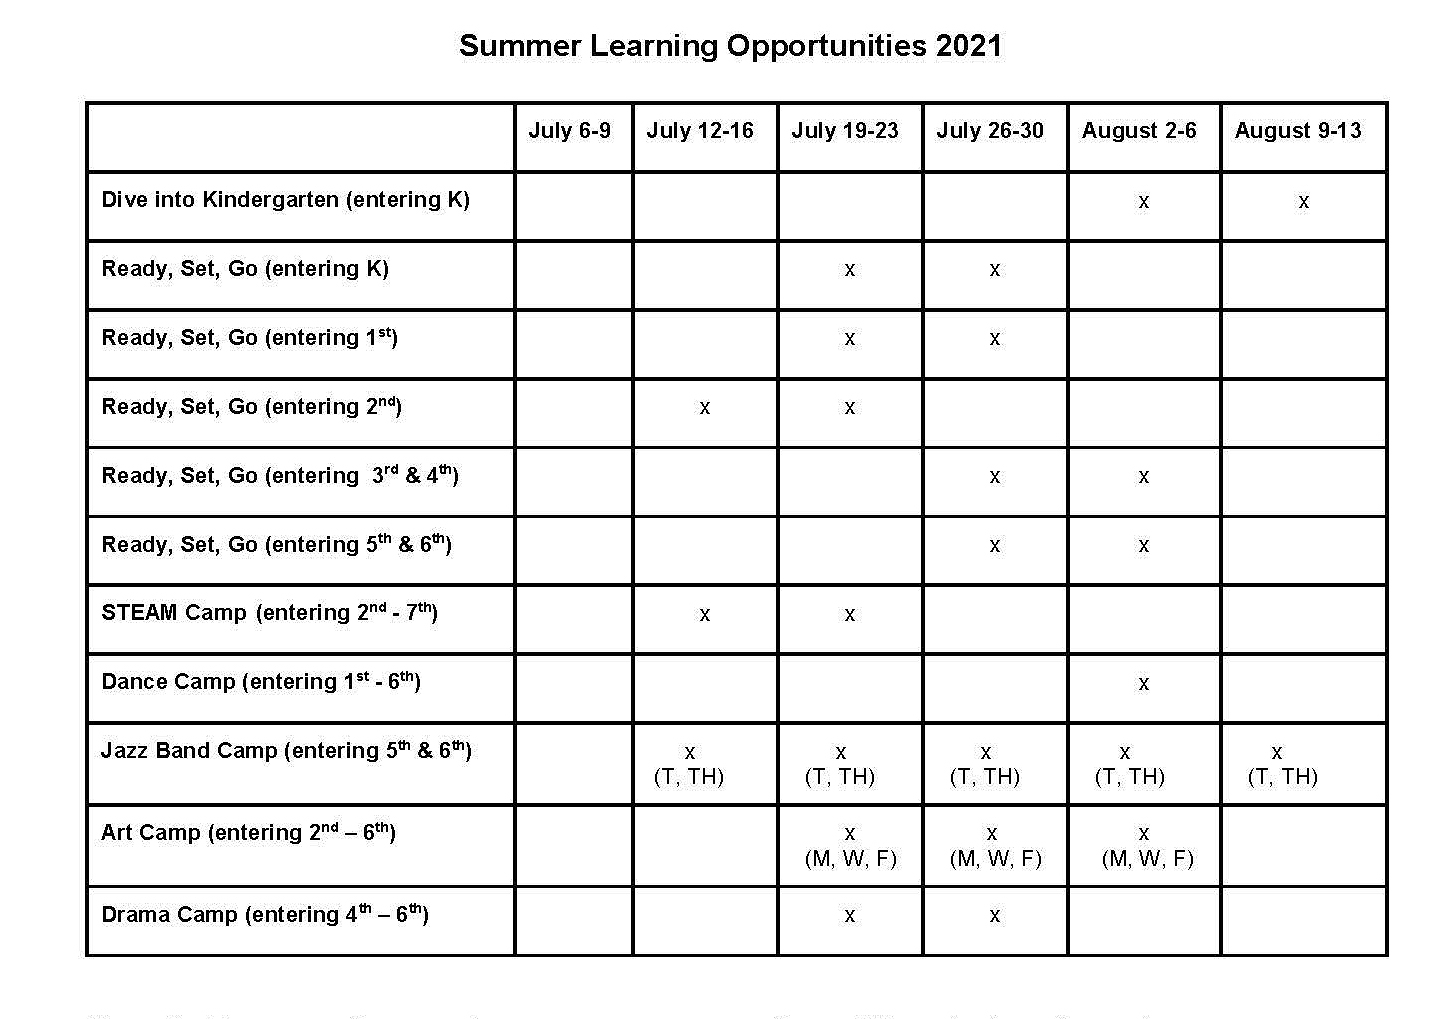 Summer Programs 2021 chart